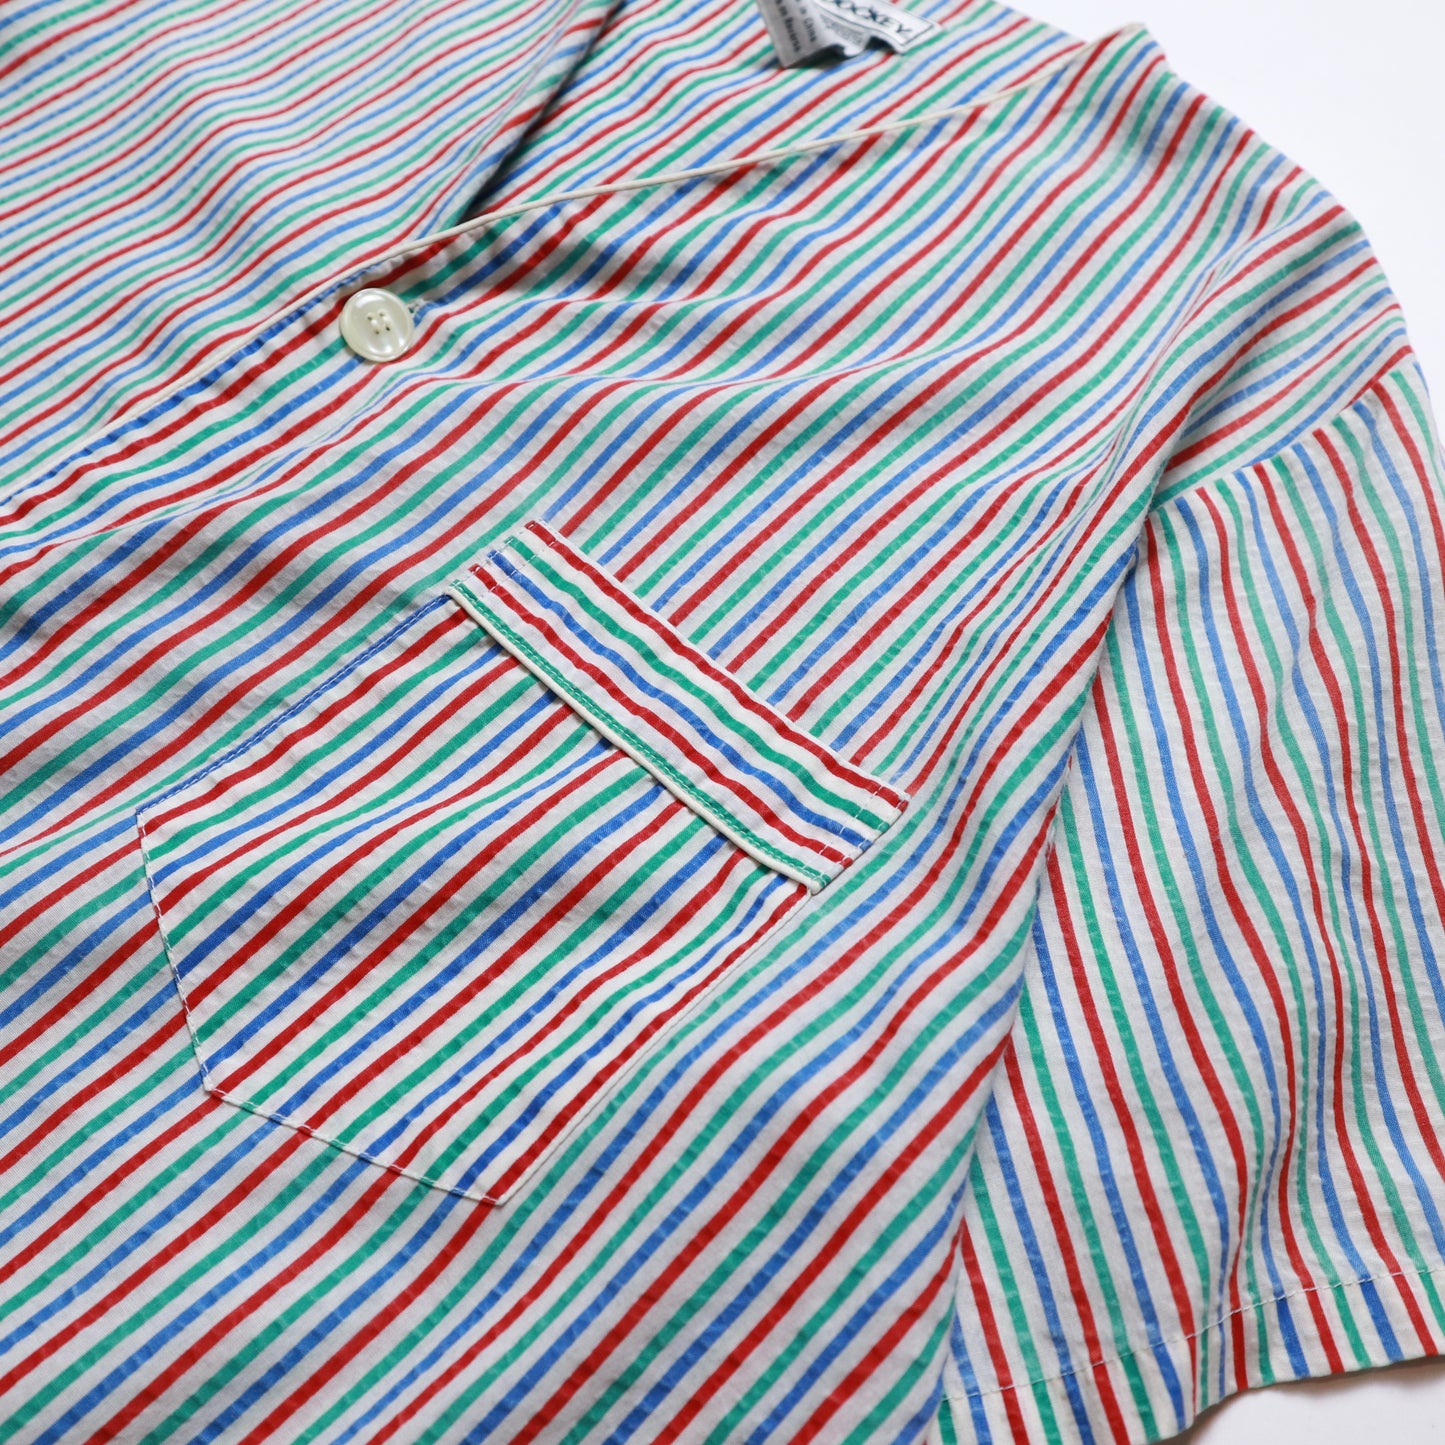 Pajama shirt 彩色條紋睡衣襯衫 條紋罩衫